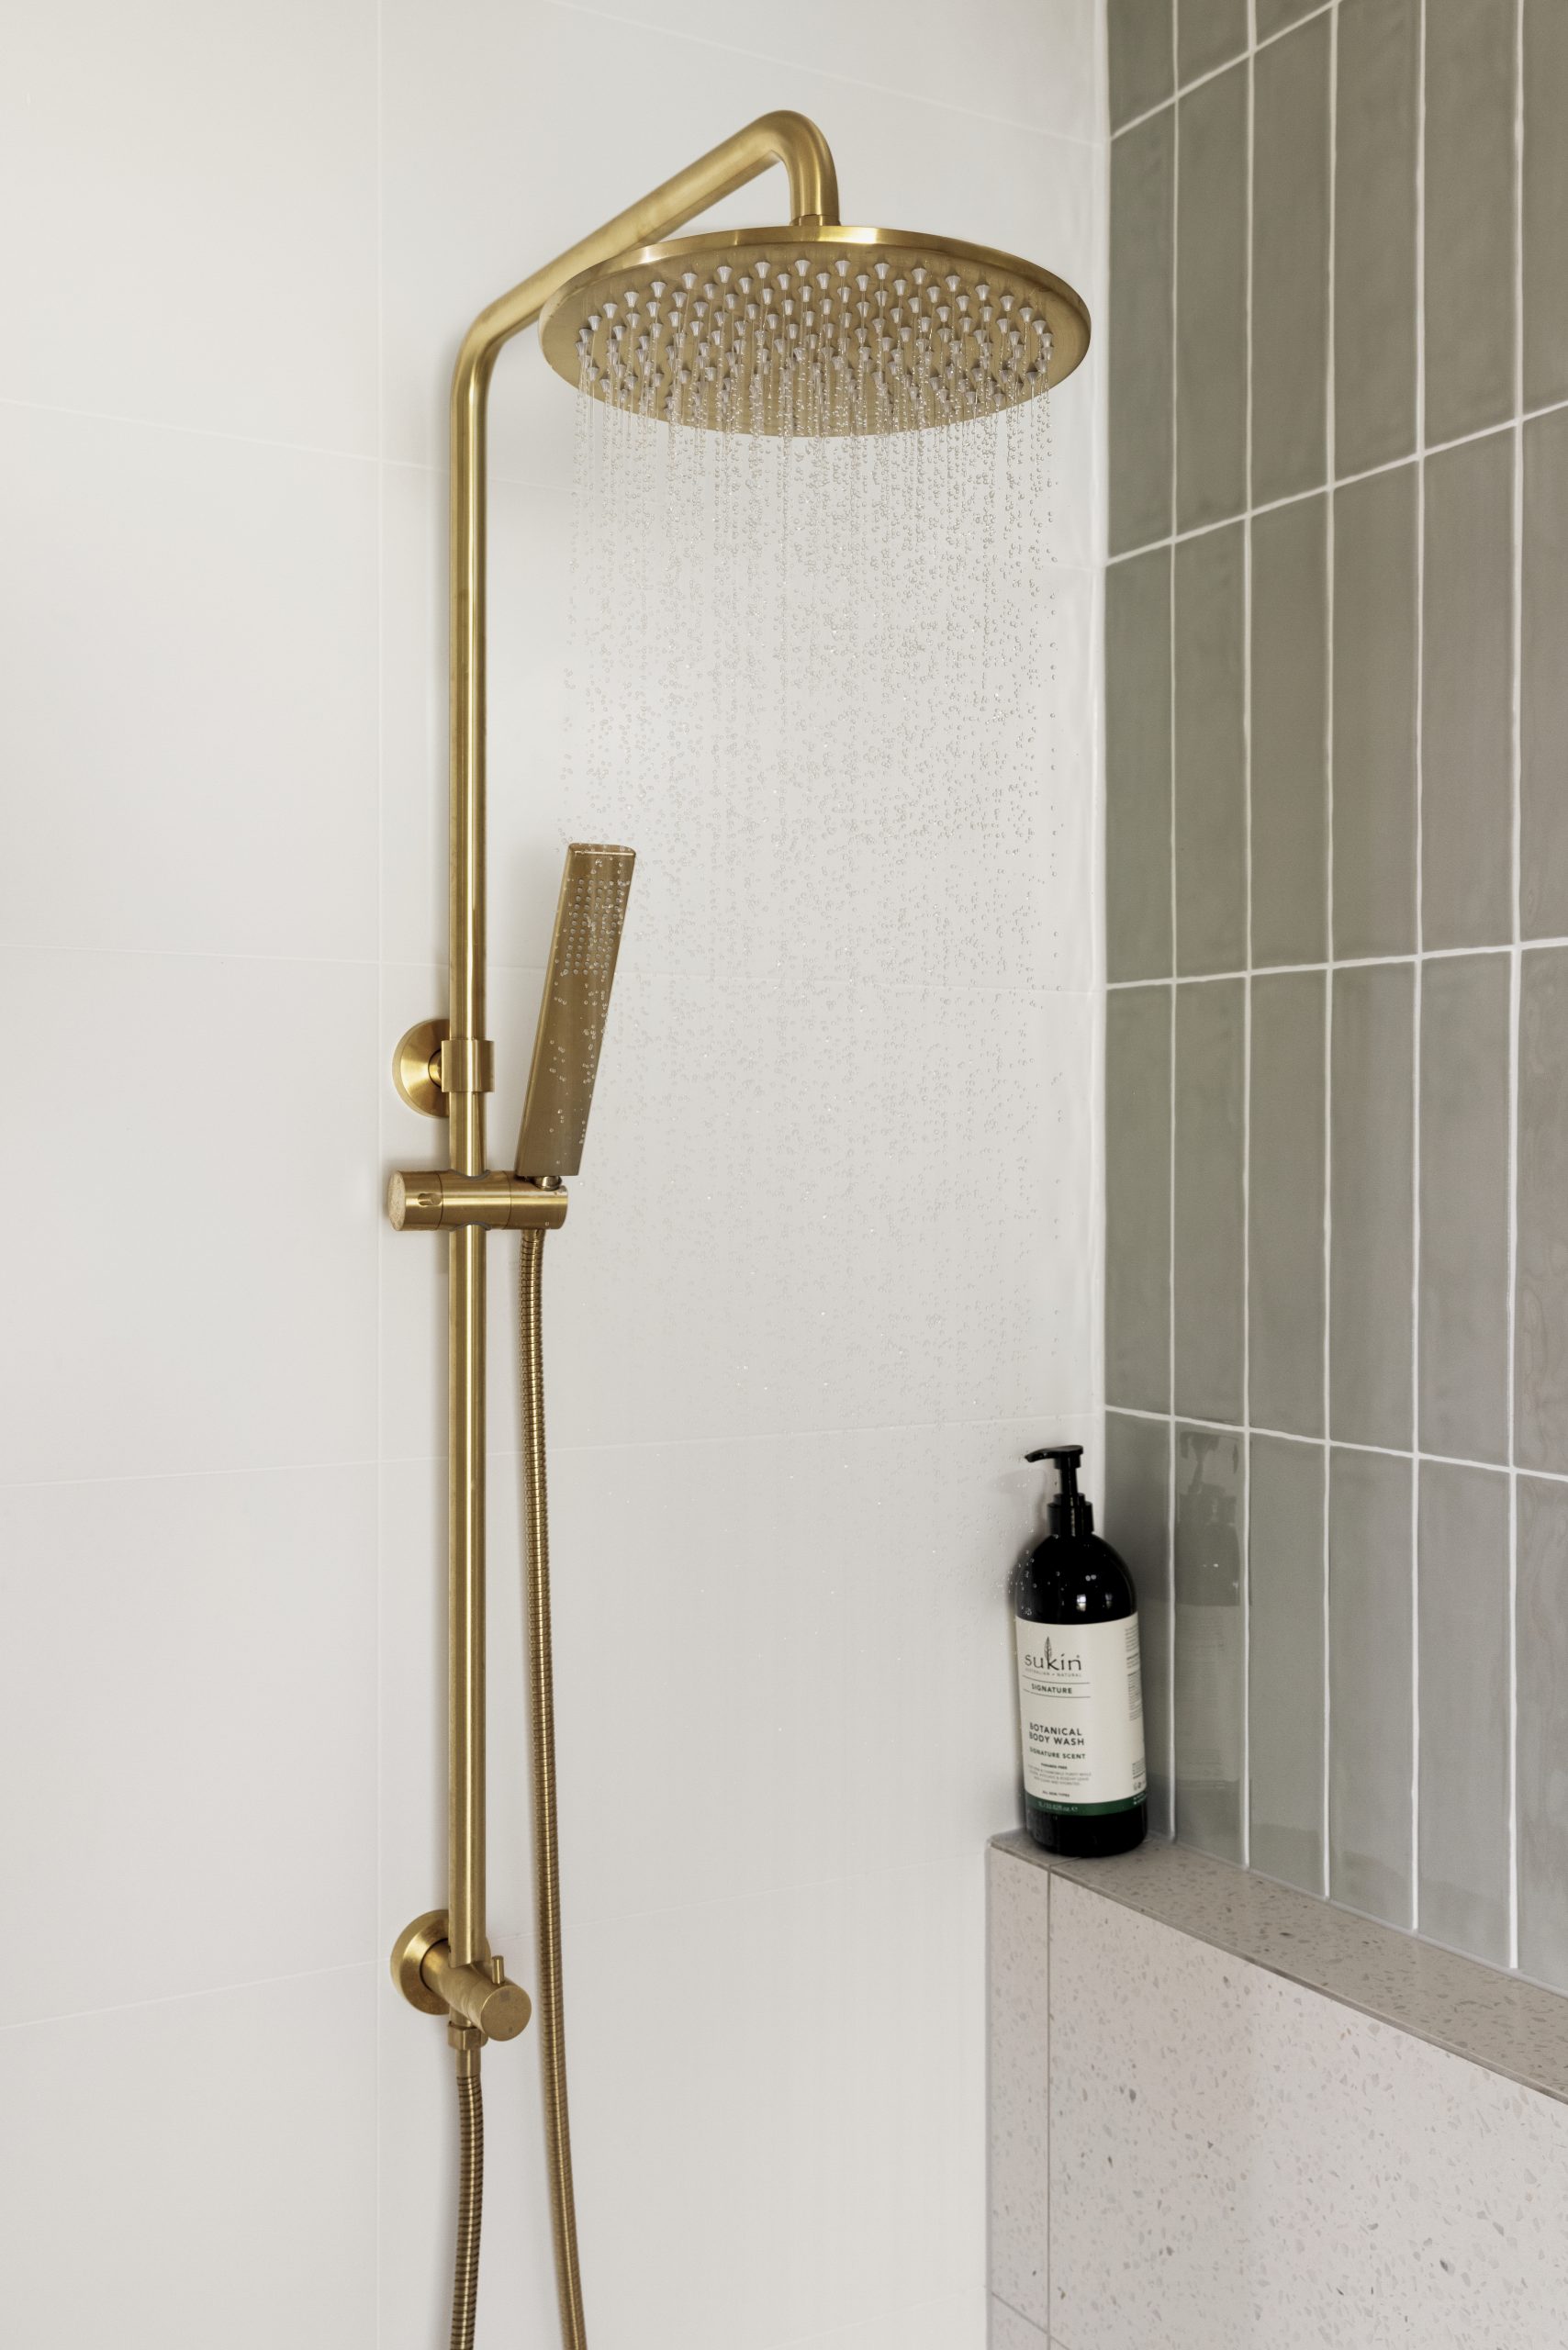 Gold coloured shower on white bathroom tiles alongside sage coloured tiles